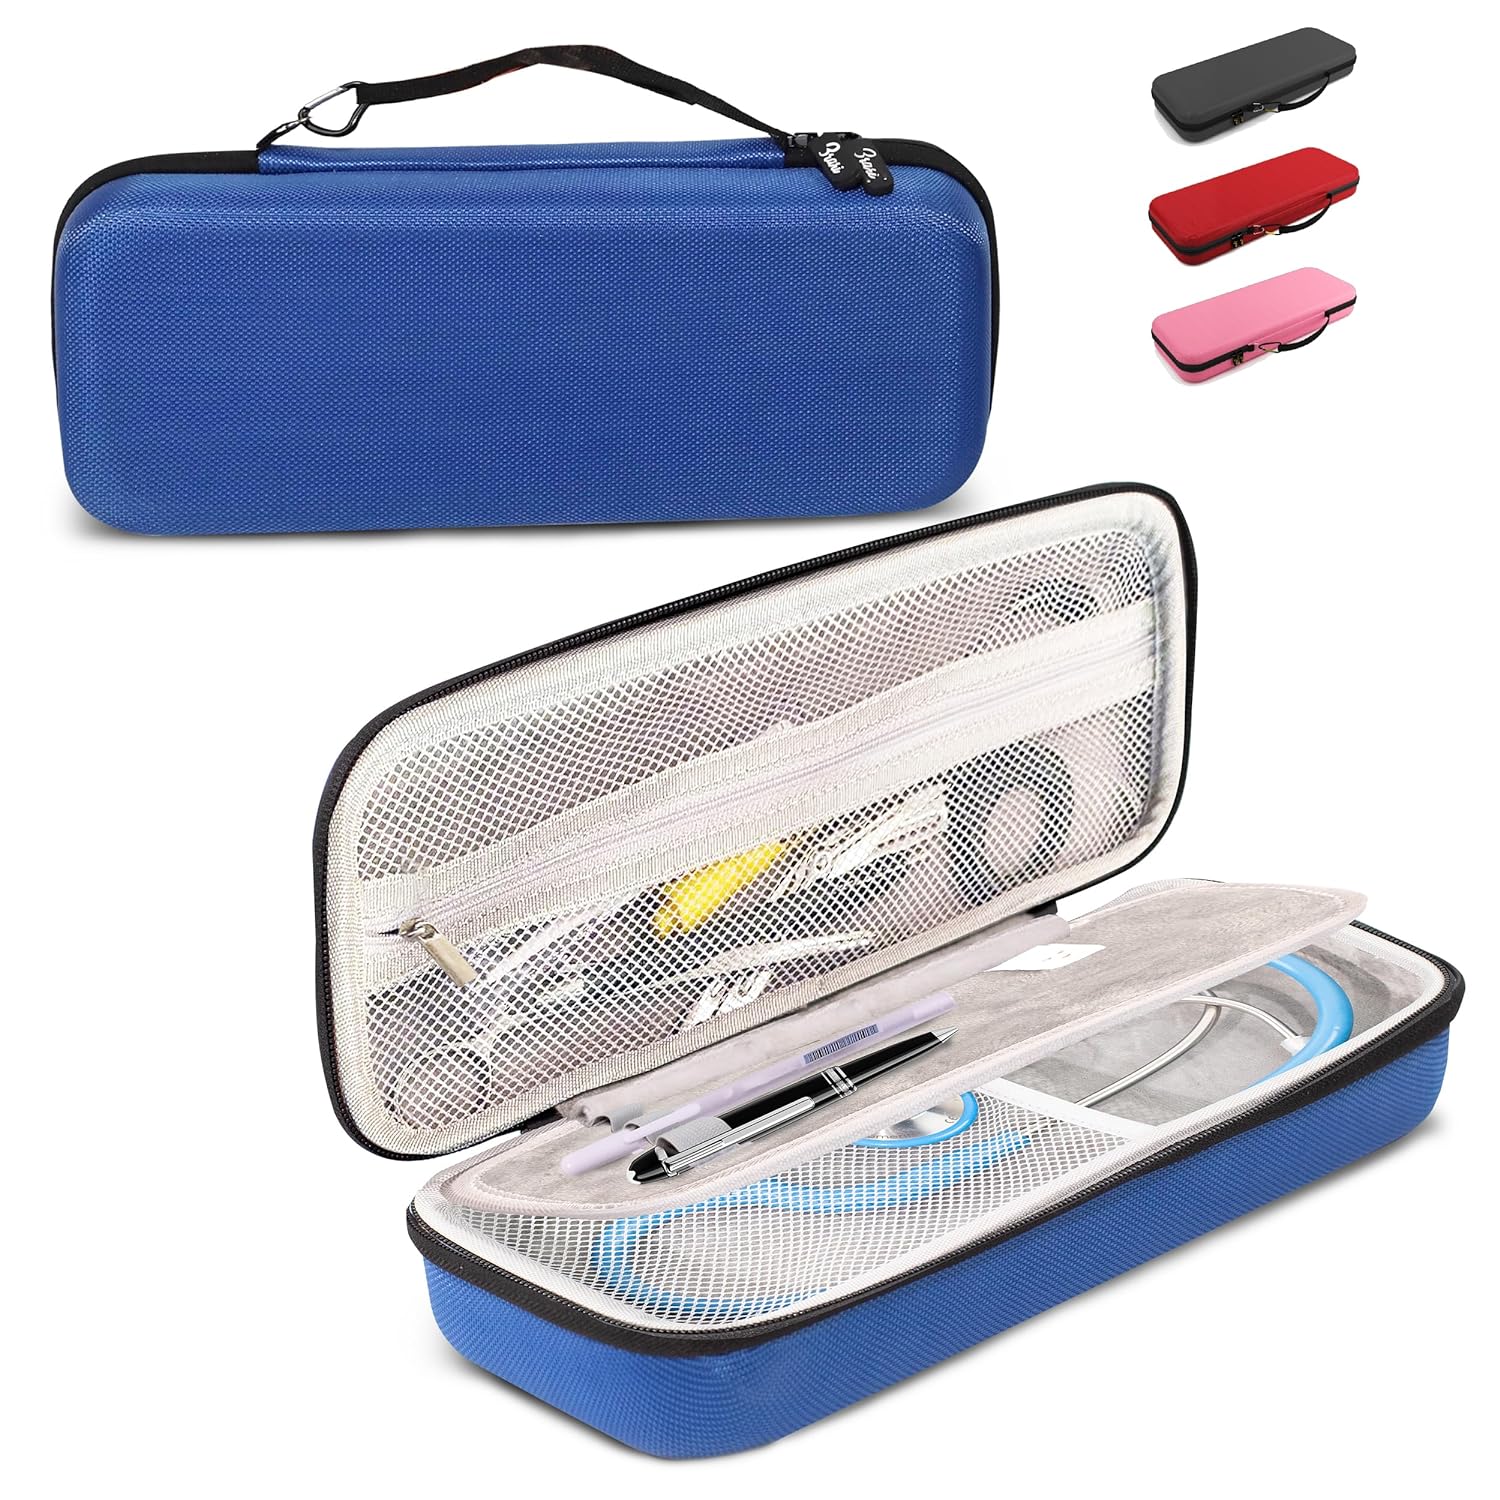 Brari-Improved Stethoscope Case. Holds All Stethoscope Sizes &Types